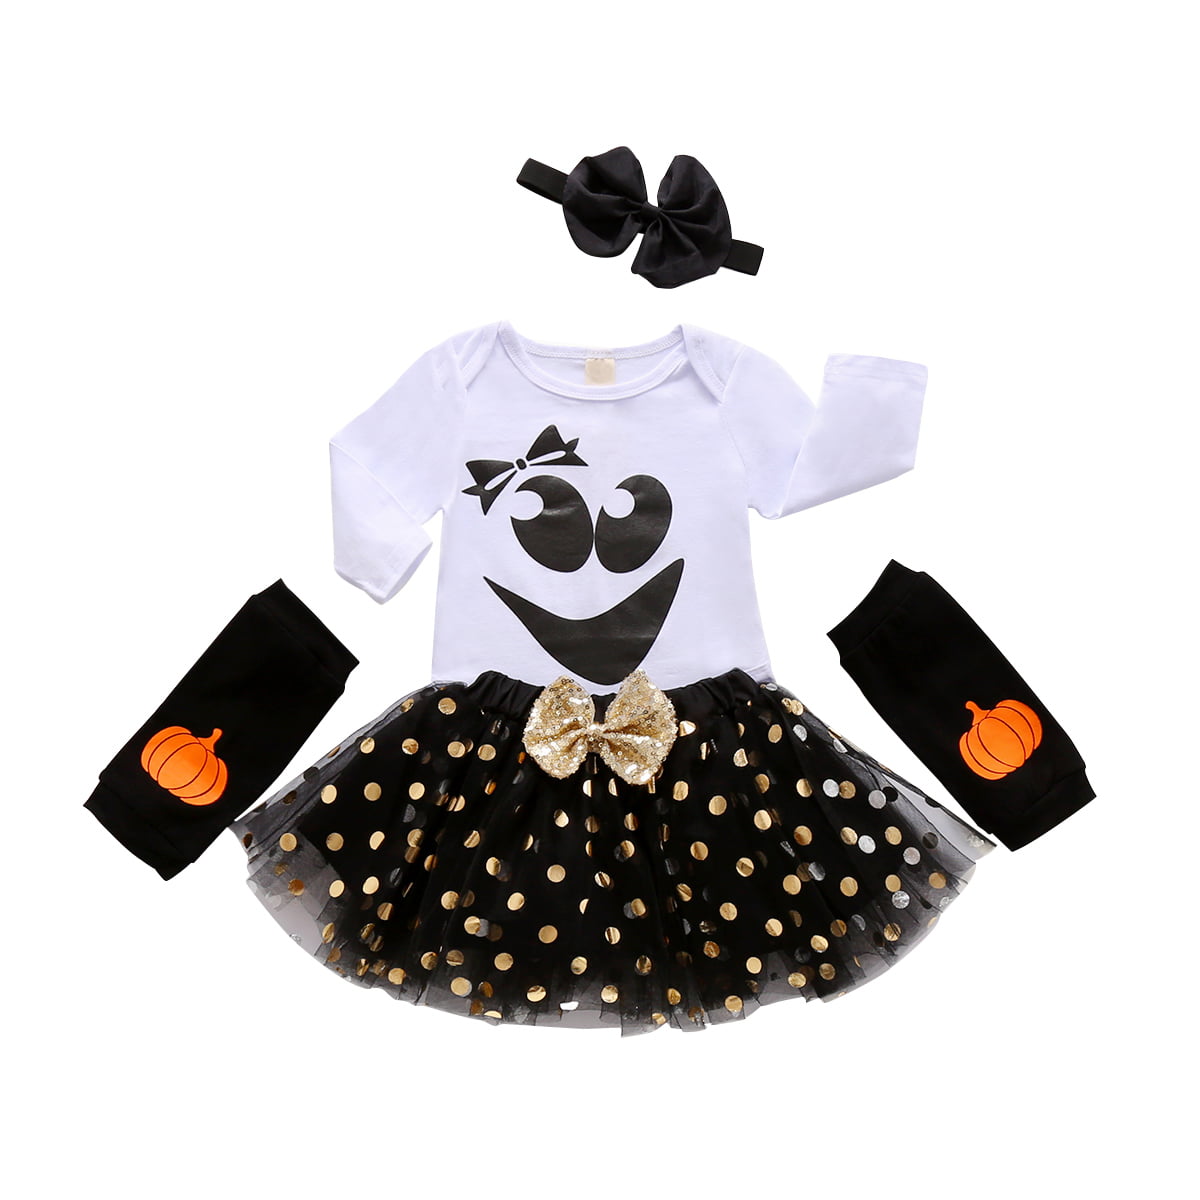 Newborn Baby Girls 4pcs Halloween Outfit Romper Dress Headband Legging Shoes 4pcs Tutu Set